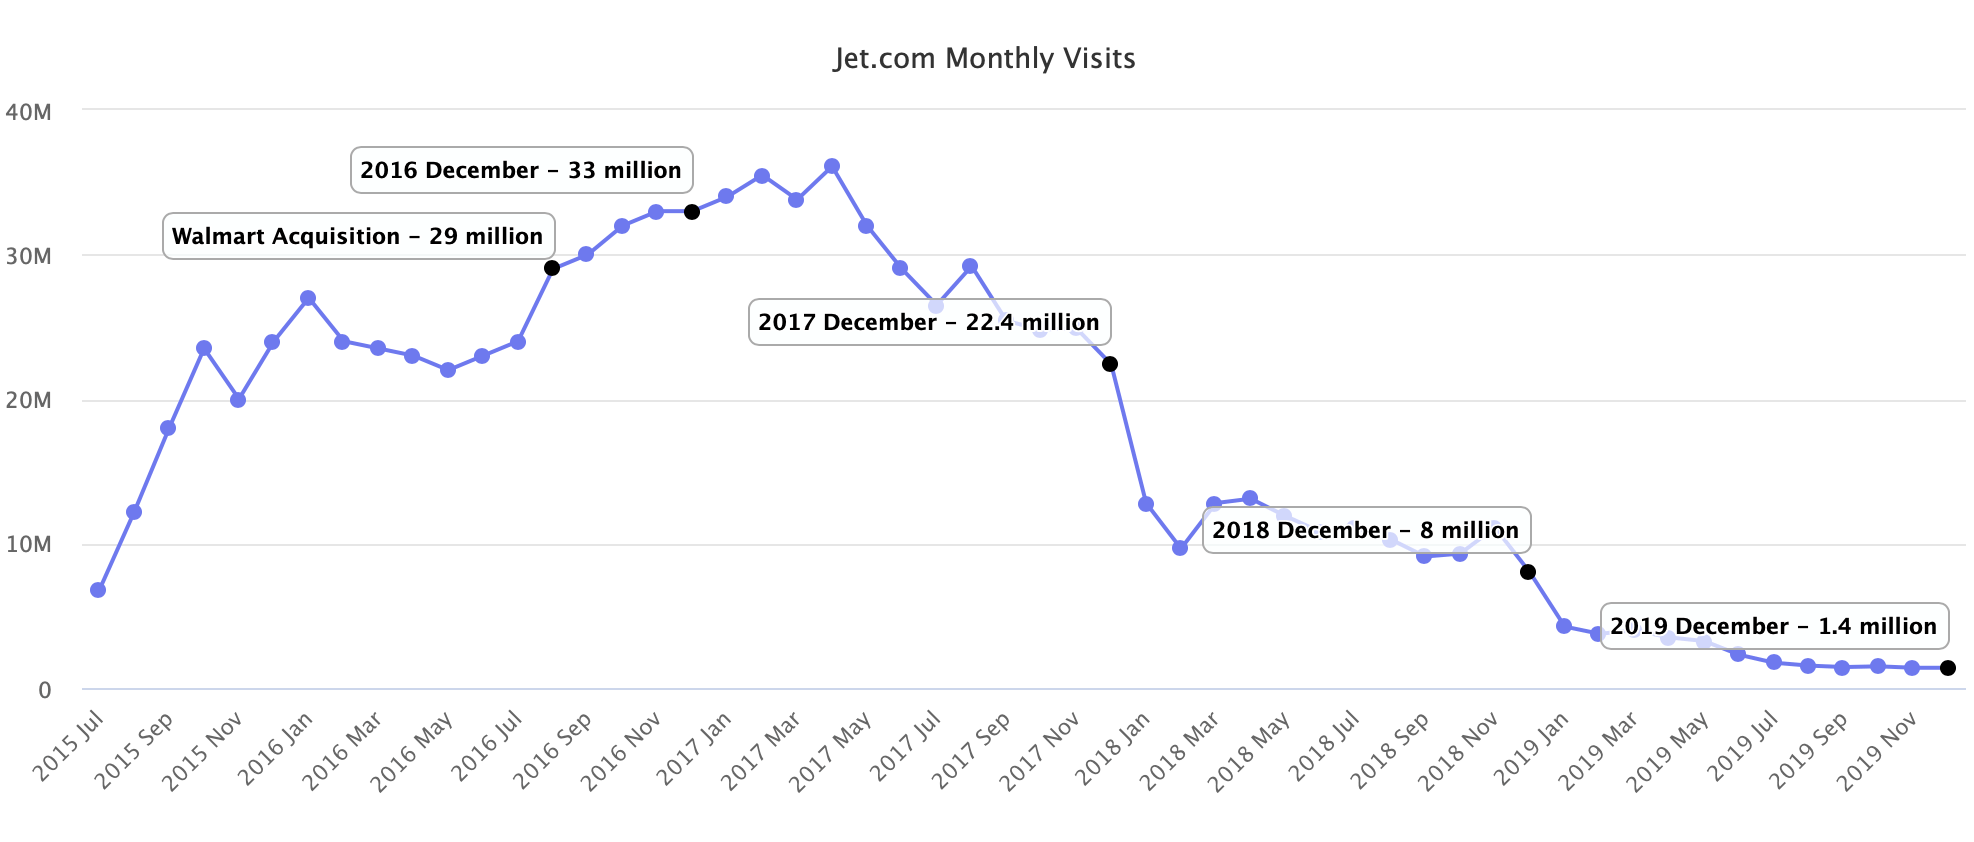 Jet.com Monthly Visits